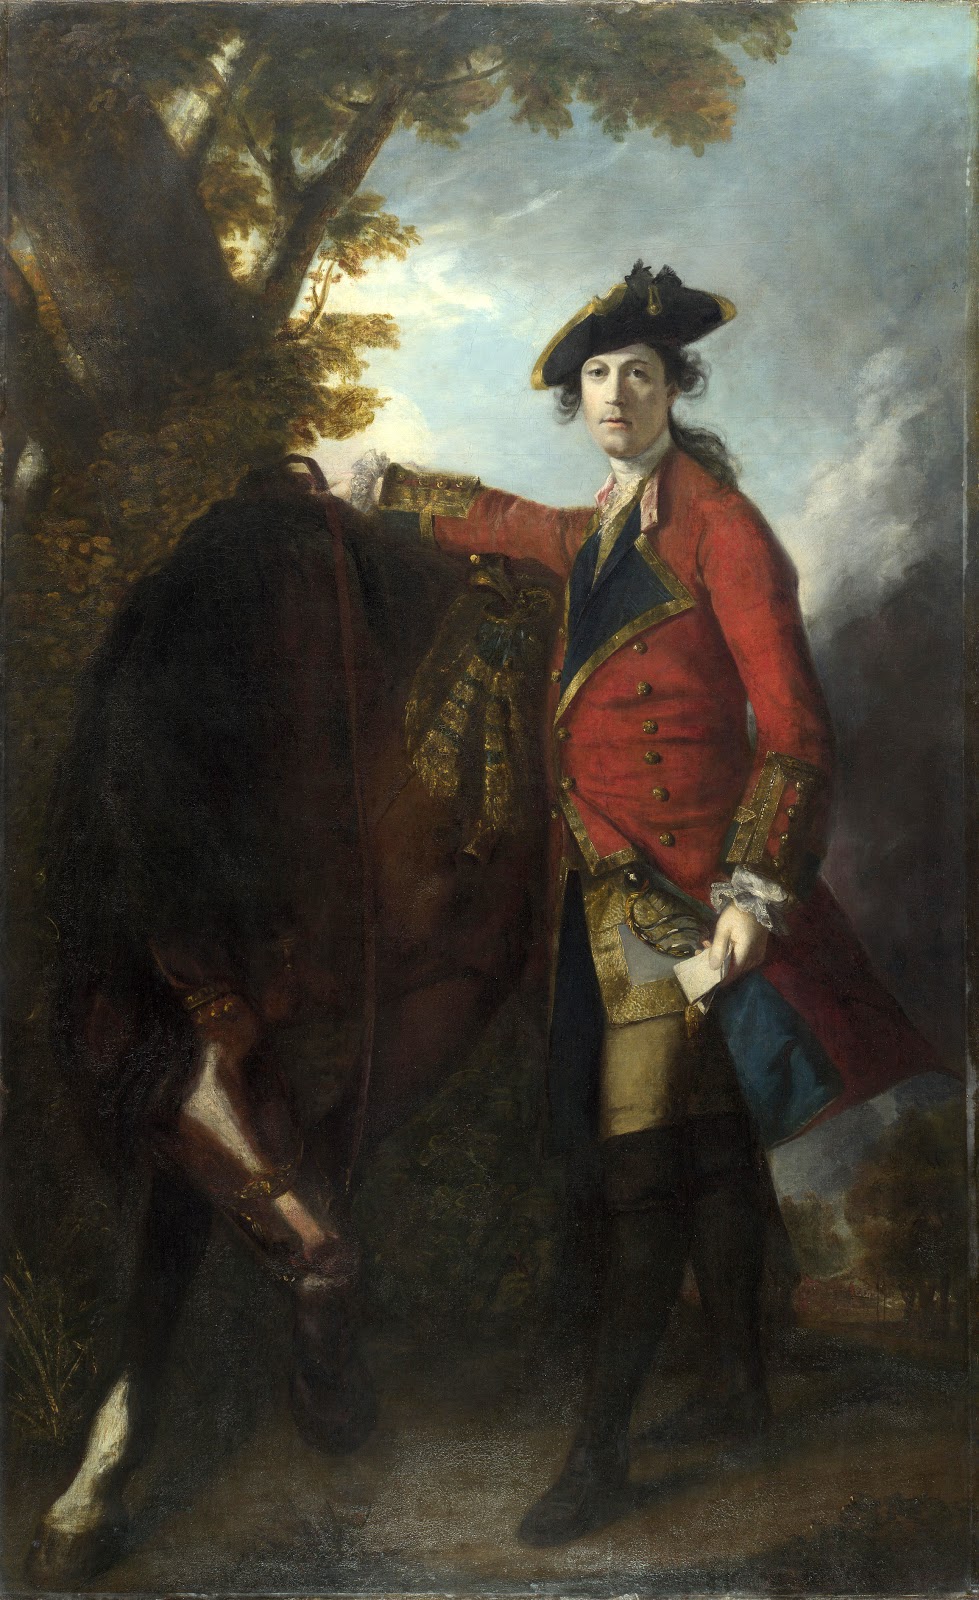 Joshua+Reynolds-1723-1792 (80).jpg